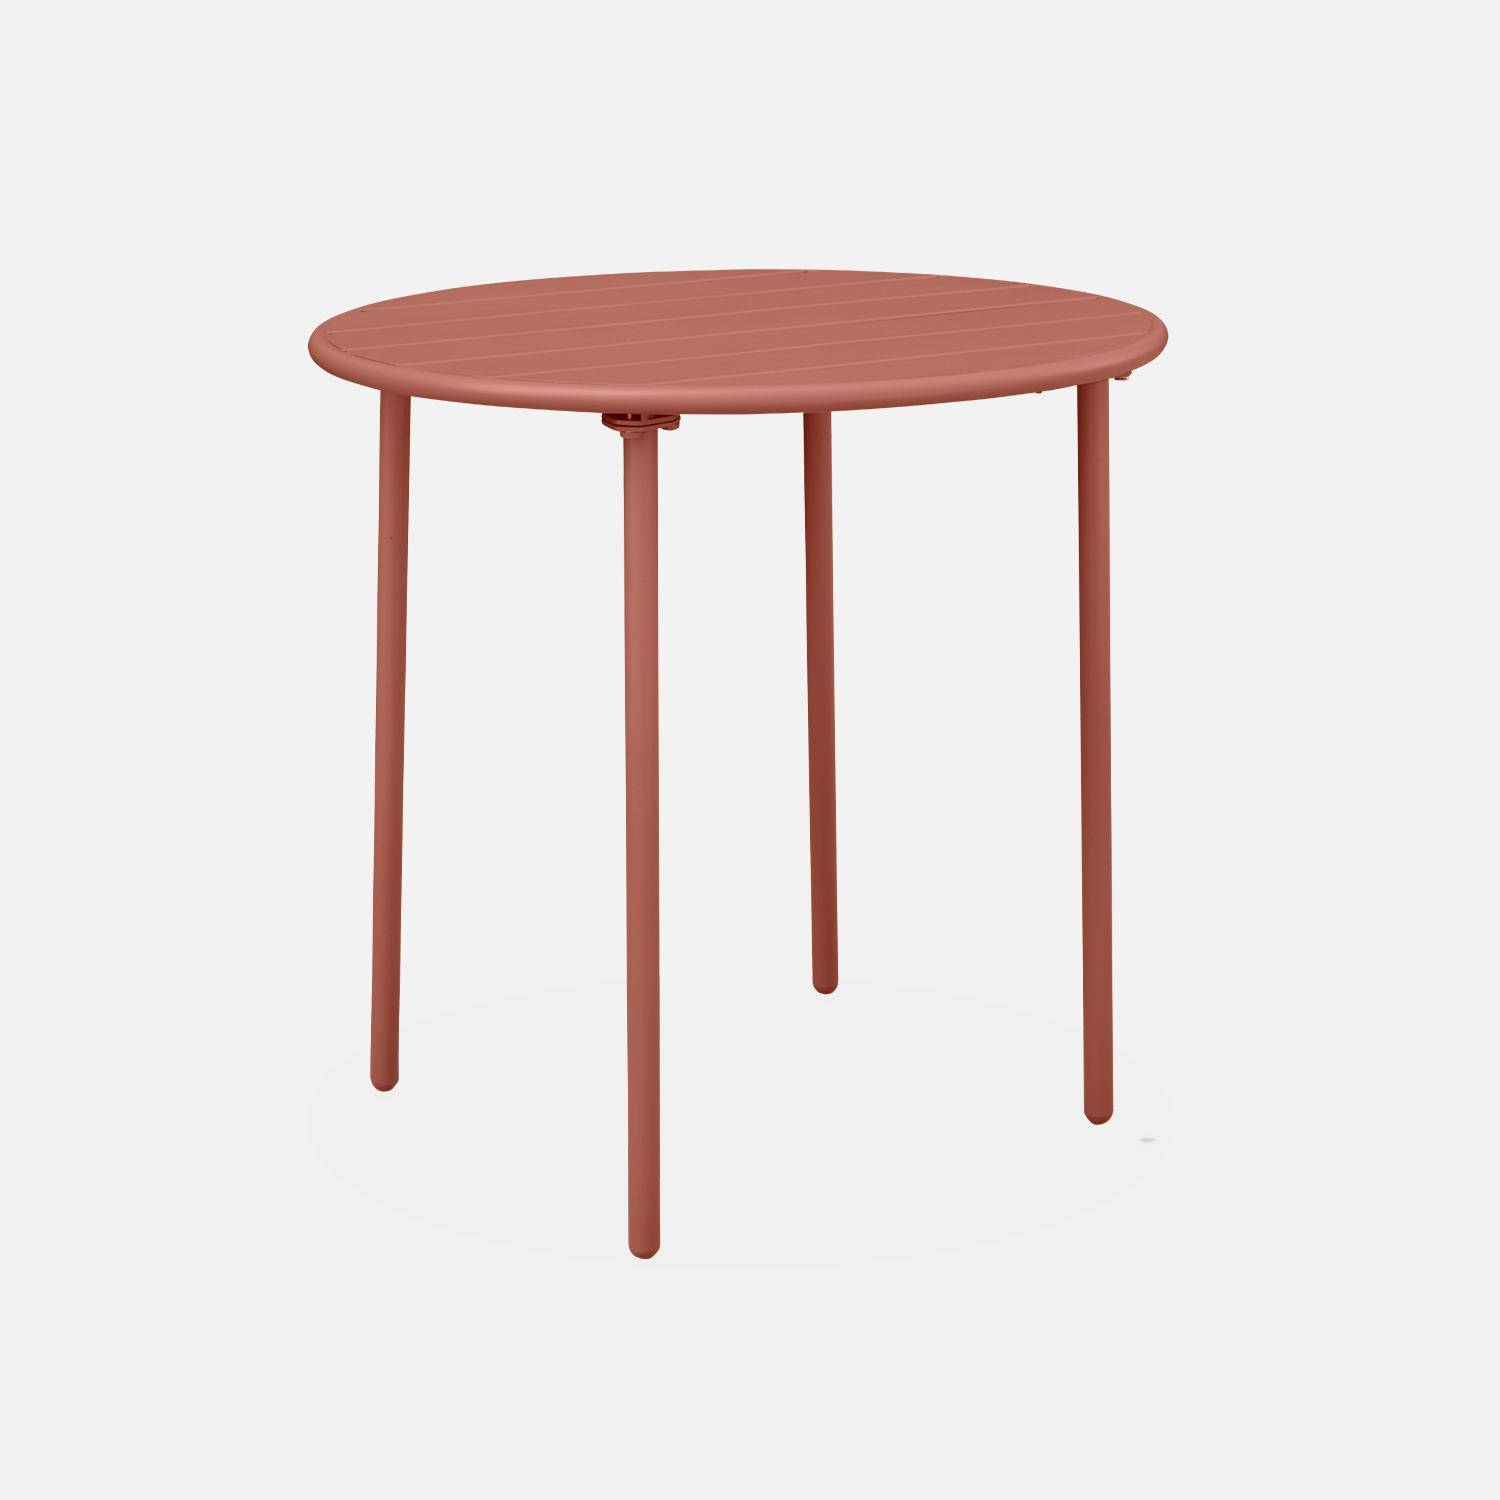 2-seater round steel garden table, Ø75cm - Amelia - Terracotta,sweeek,Photo3